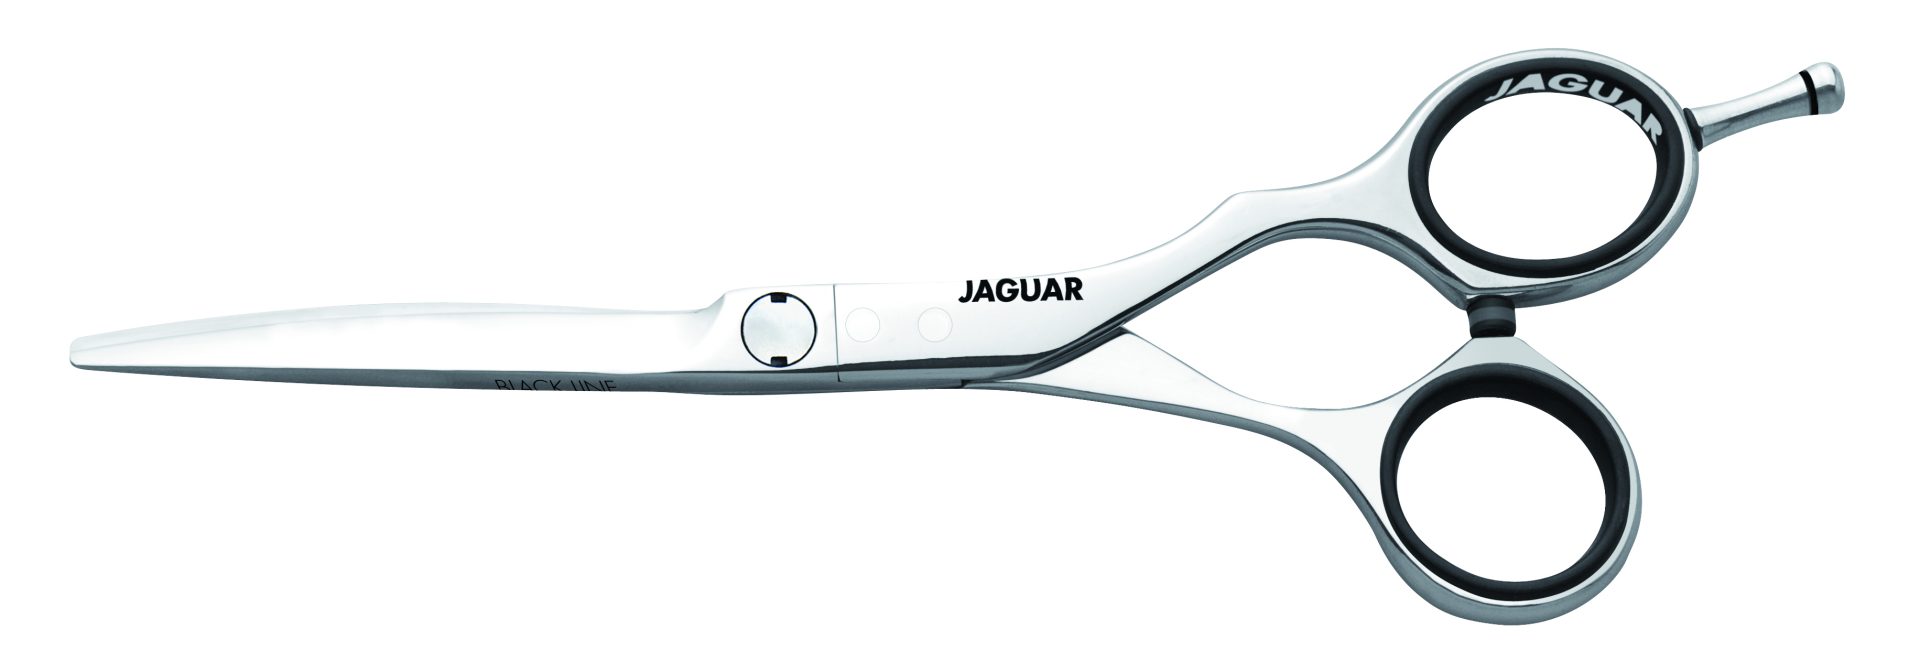 jaguar scissors 94575